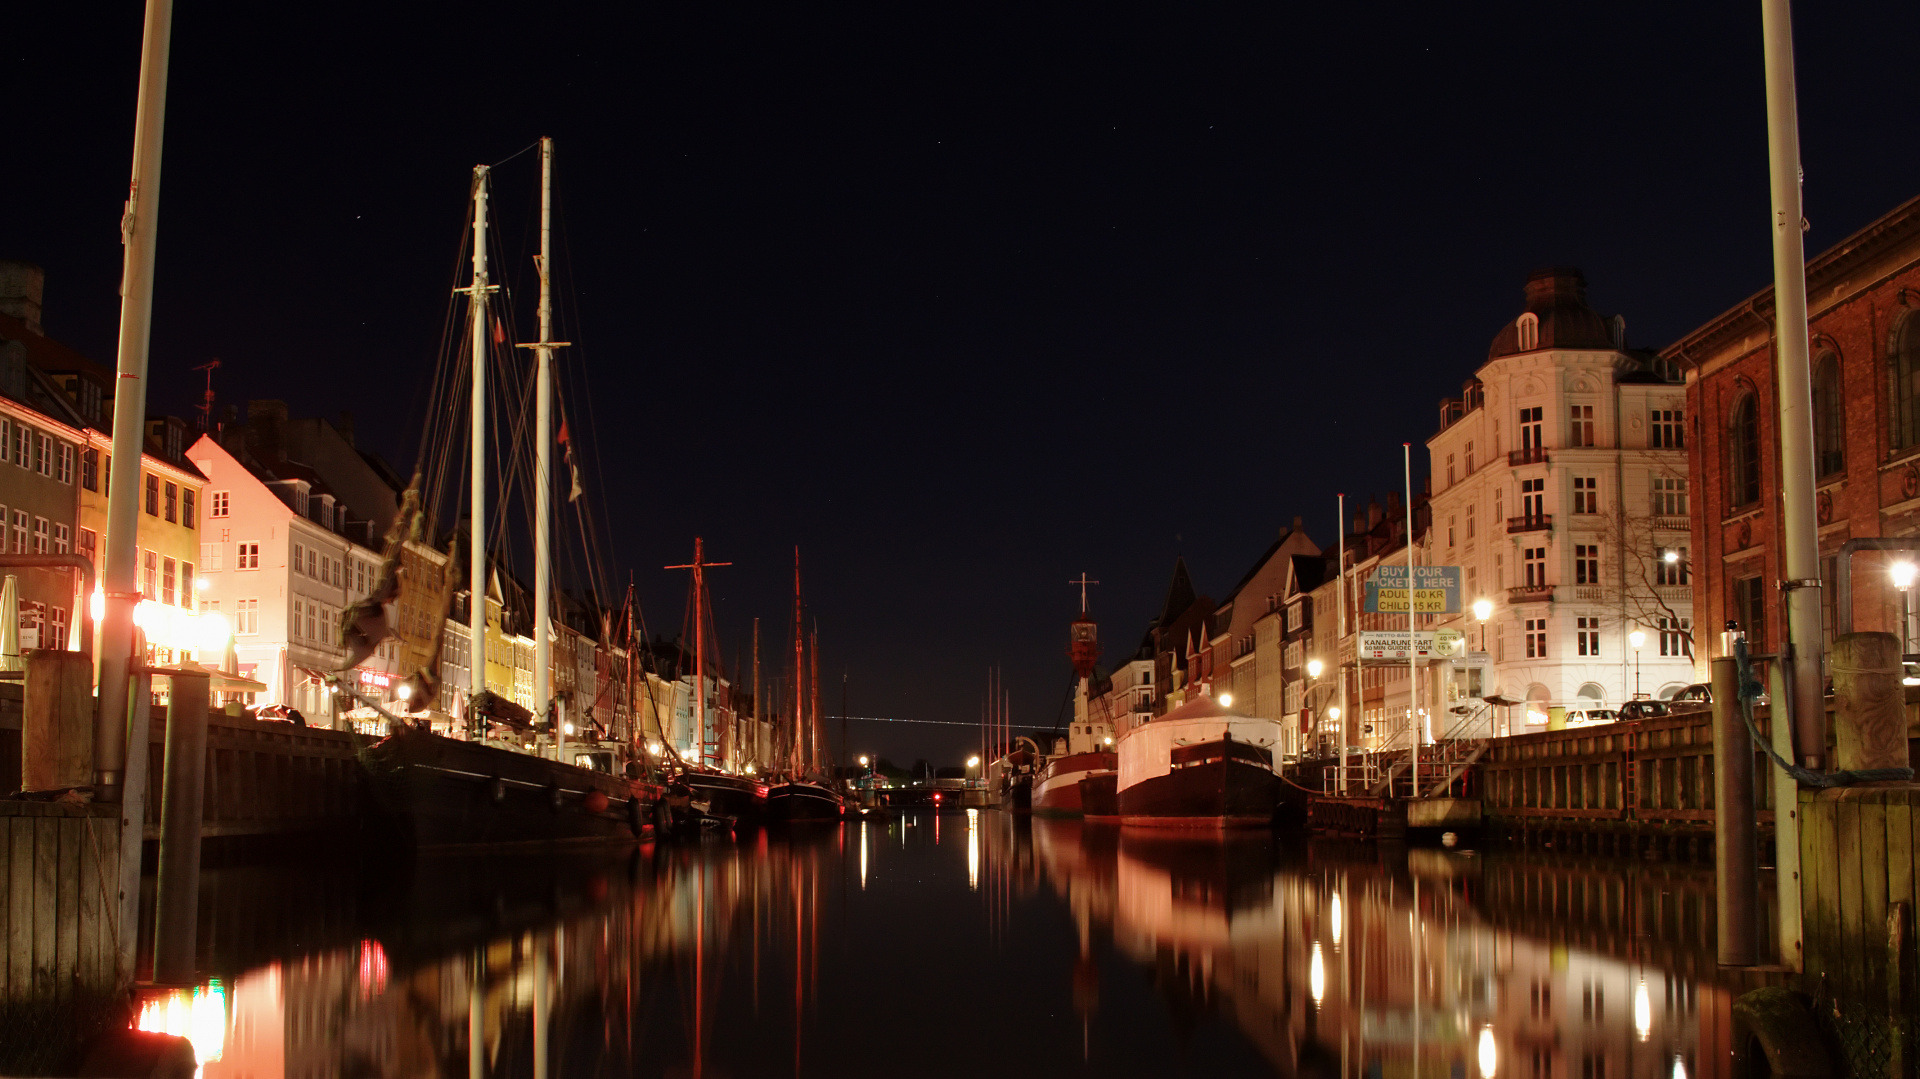 Nyhavn (Travels » Copenhagen » The City At Night)